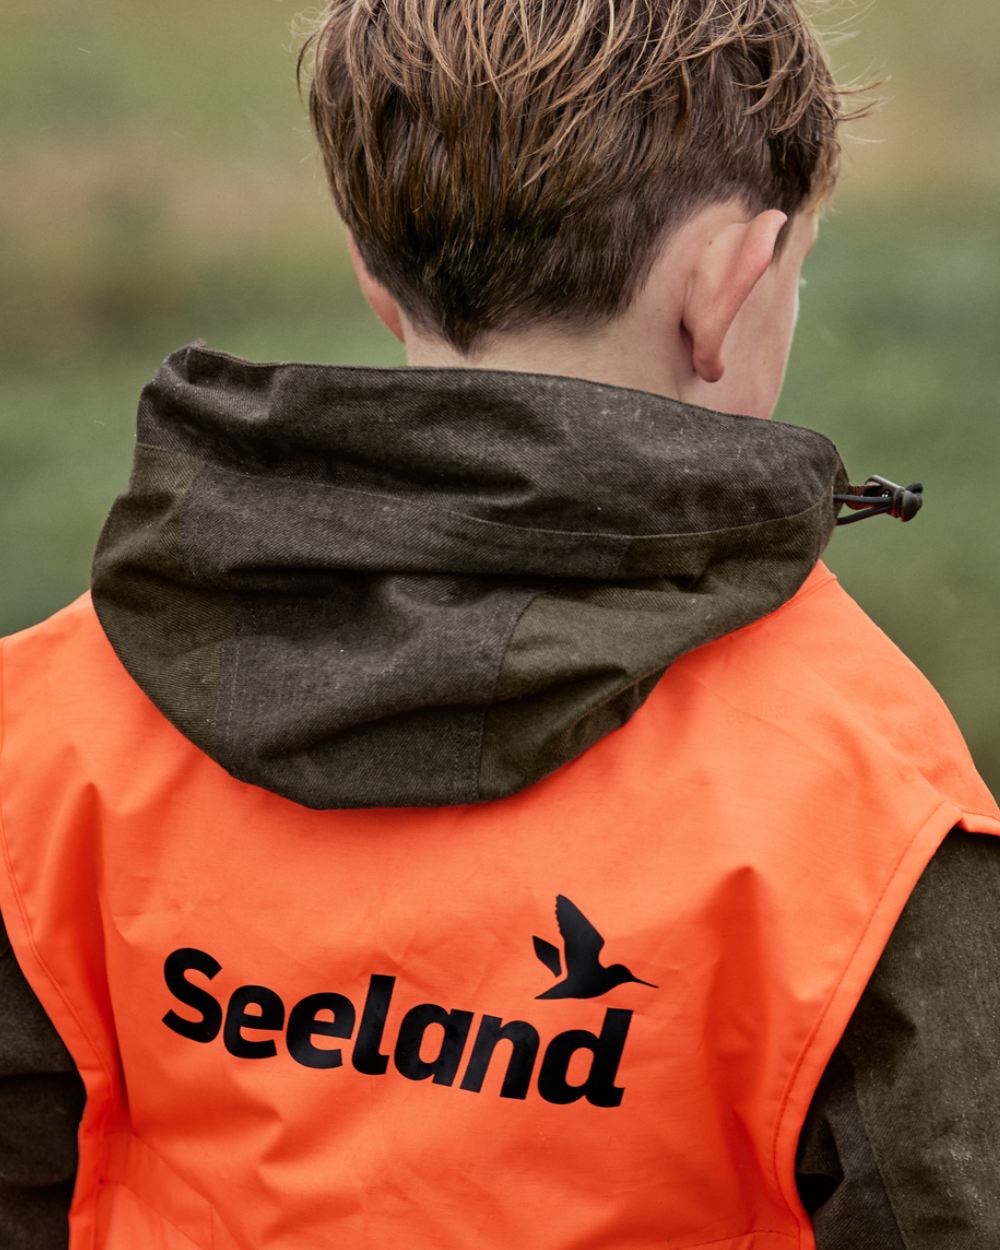 Pine Green Melange Coloured Seeland Childrens Avail Jacket On A Forest Background